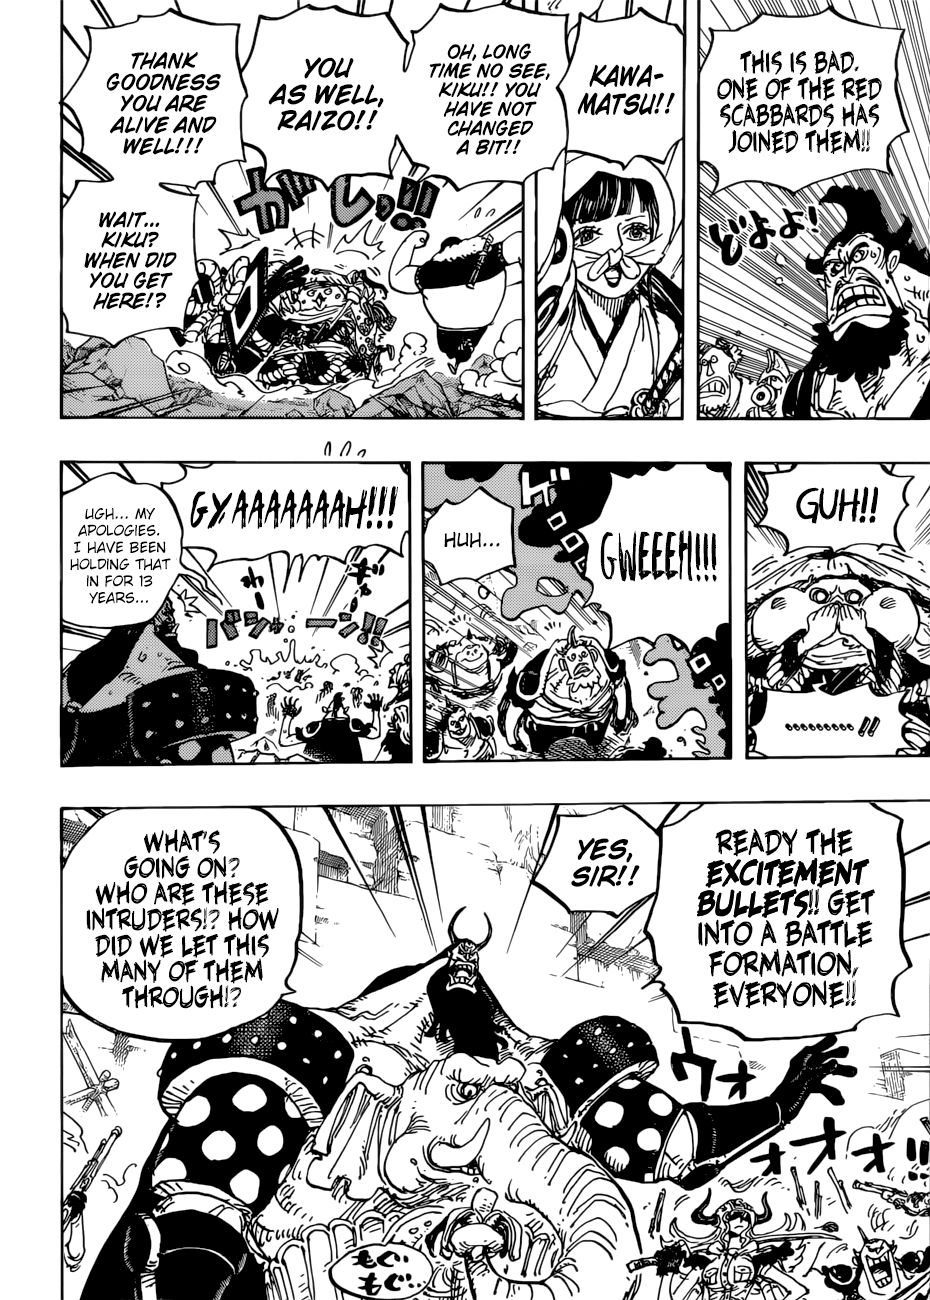 One Piece, Chapter 948 - Kawamatsu the kappa takes the stage image 13